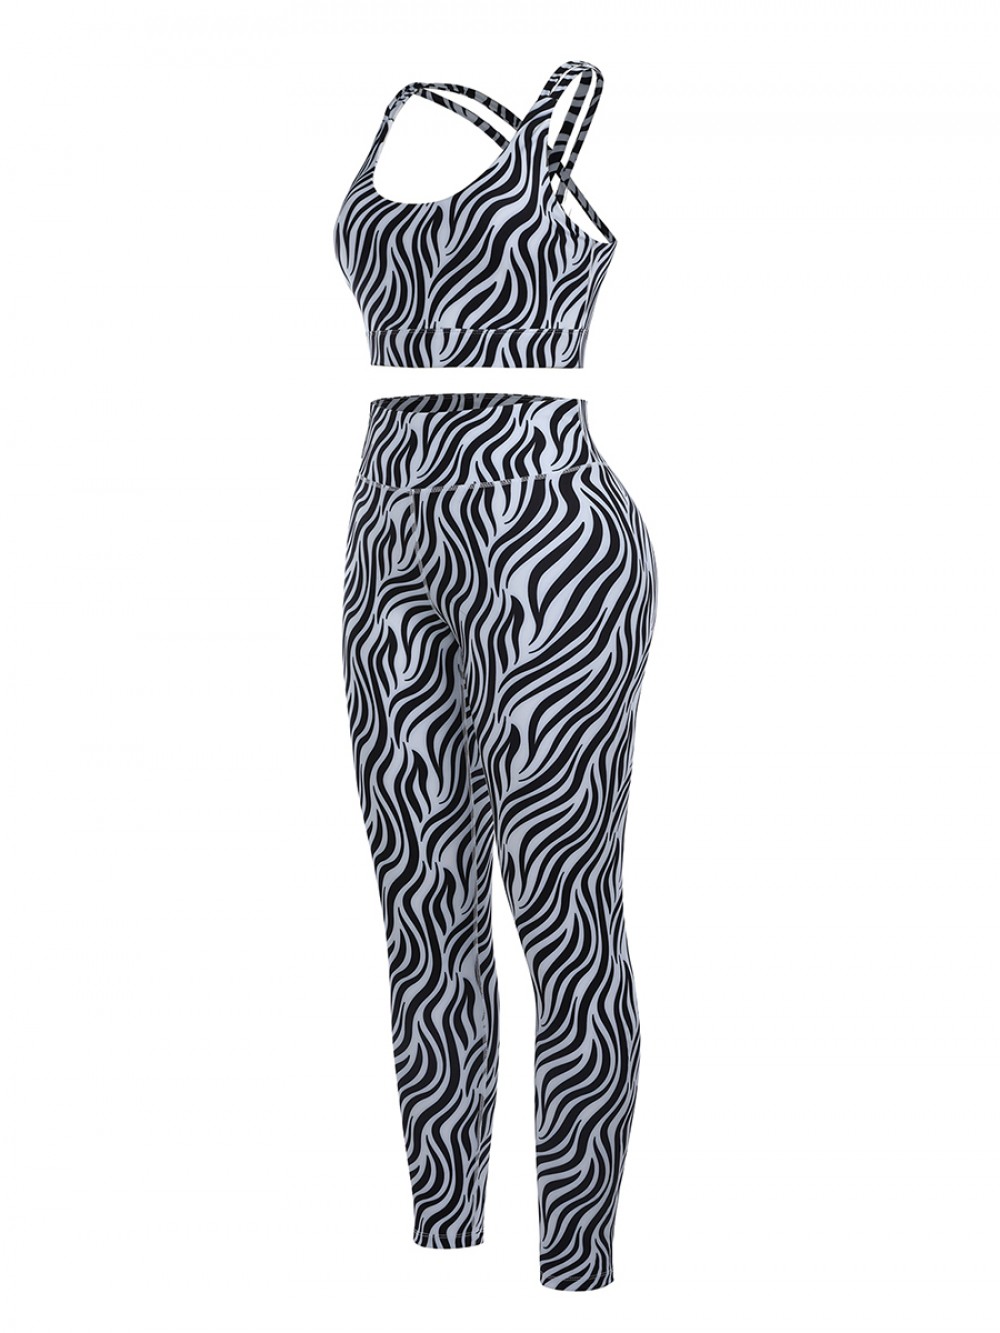 Black Zebra Print Yoga Outfit High Waist Strap Lightweight